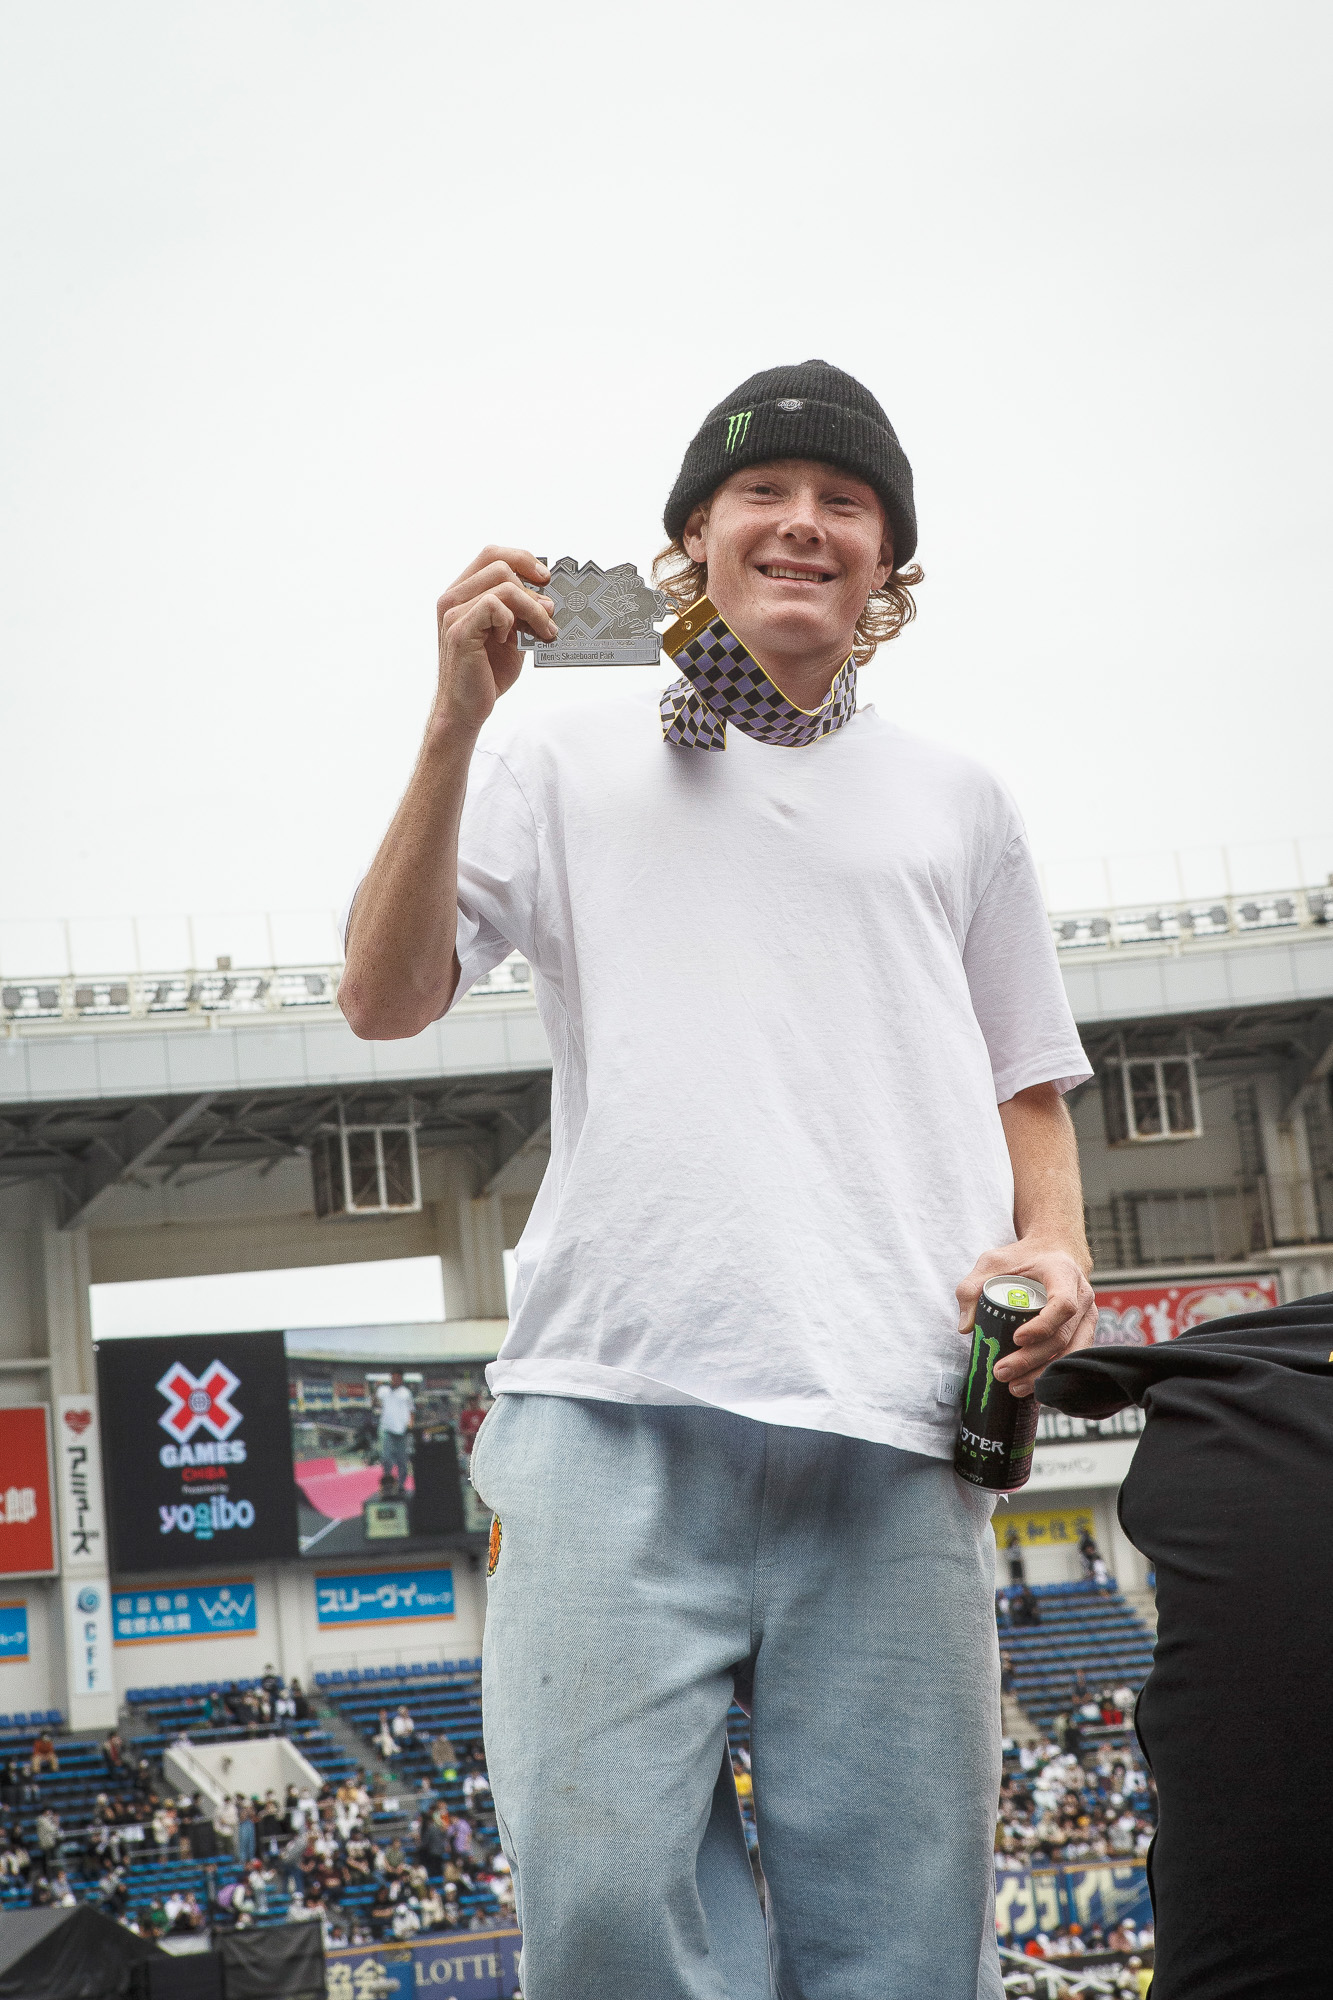 Monster Energy's Kieran Woolley Takes Silver in Men's Skateboard Park at X Games Chiba 2022